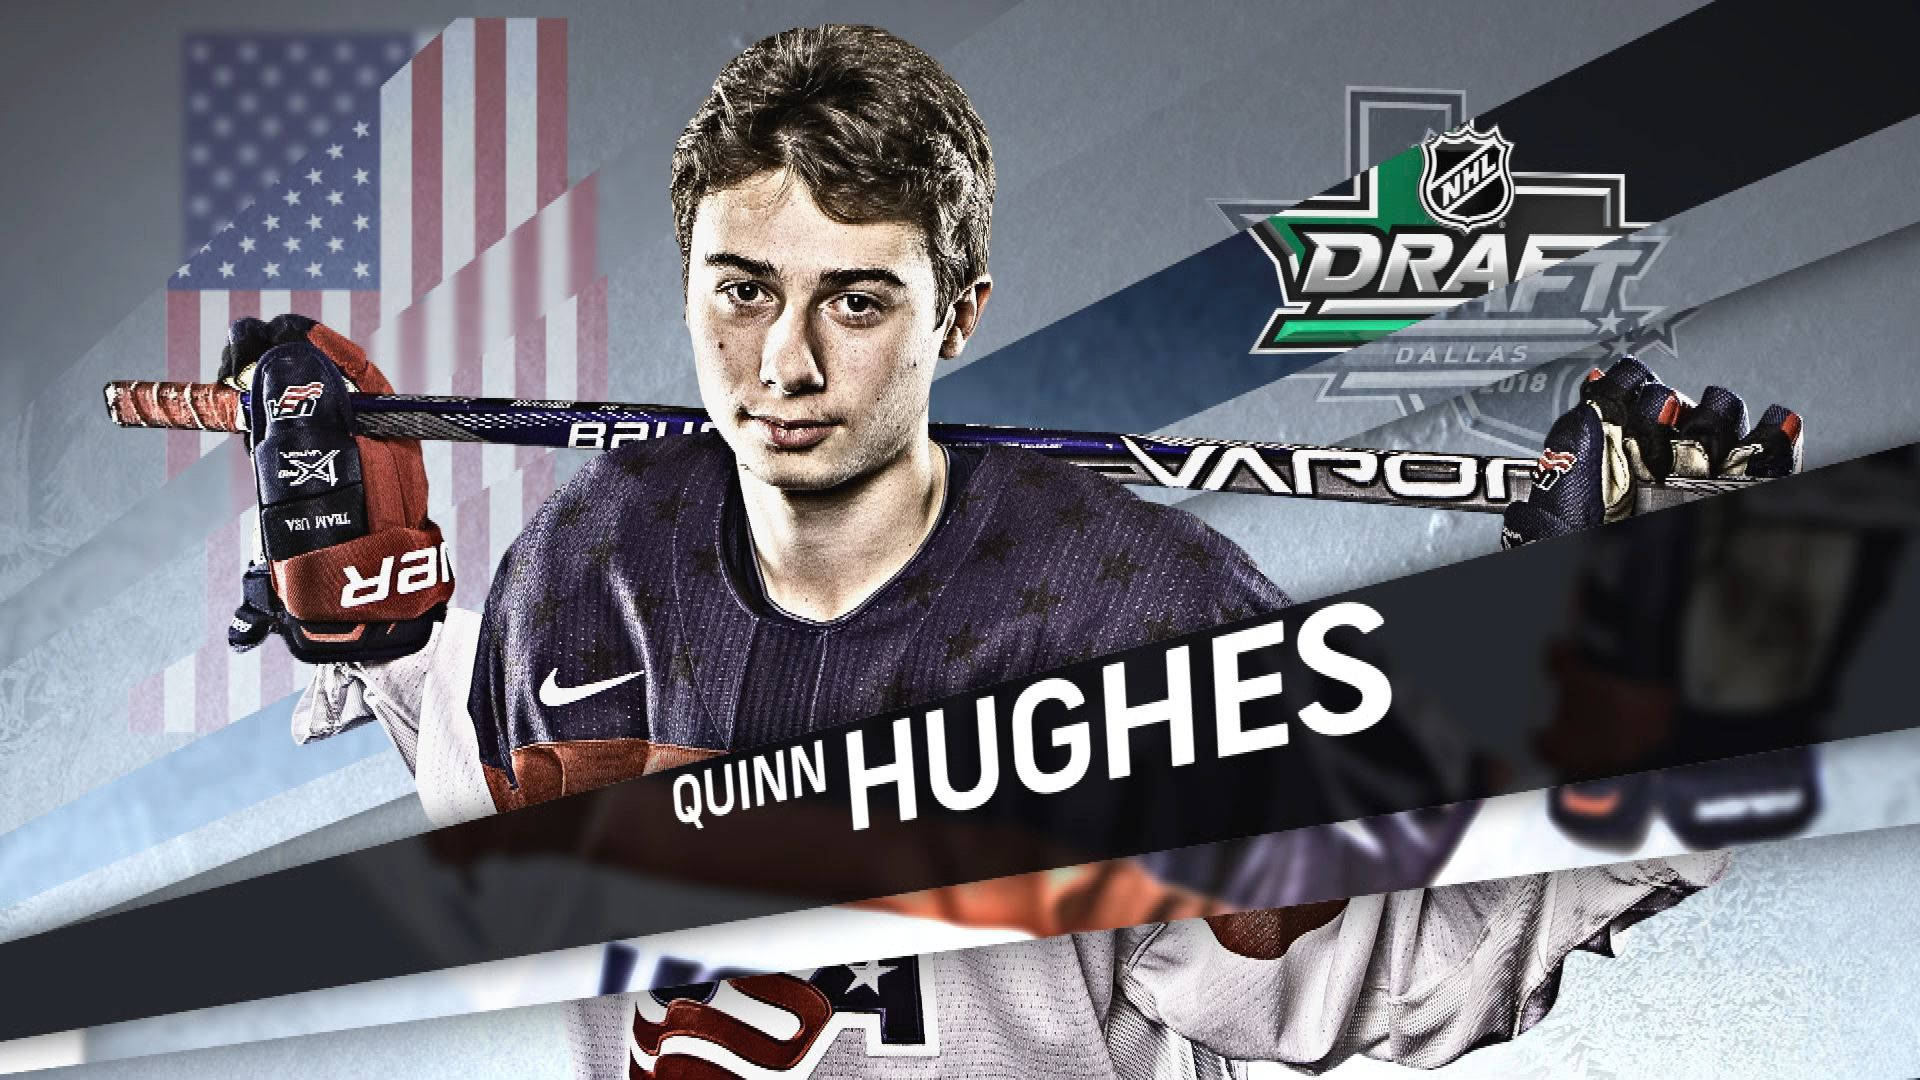 Quinn Hughes In Action During NHL Draft 2018 Wallpaper